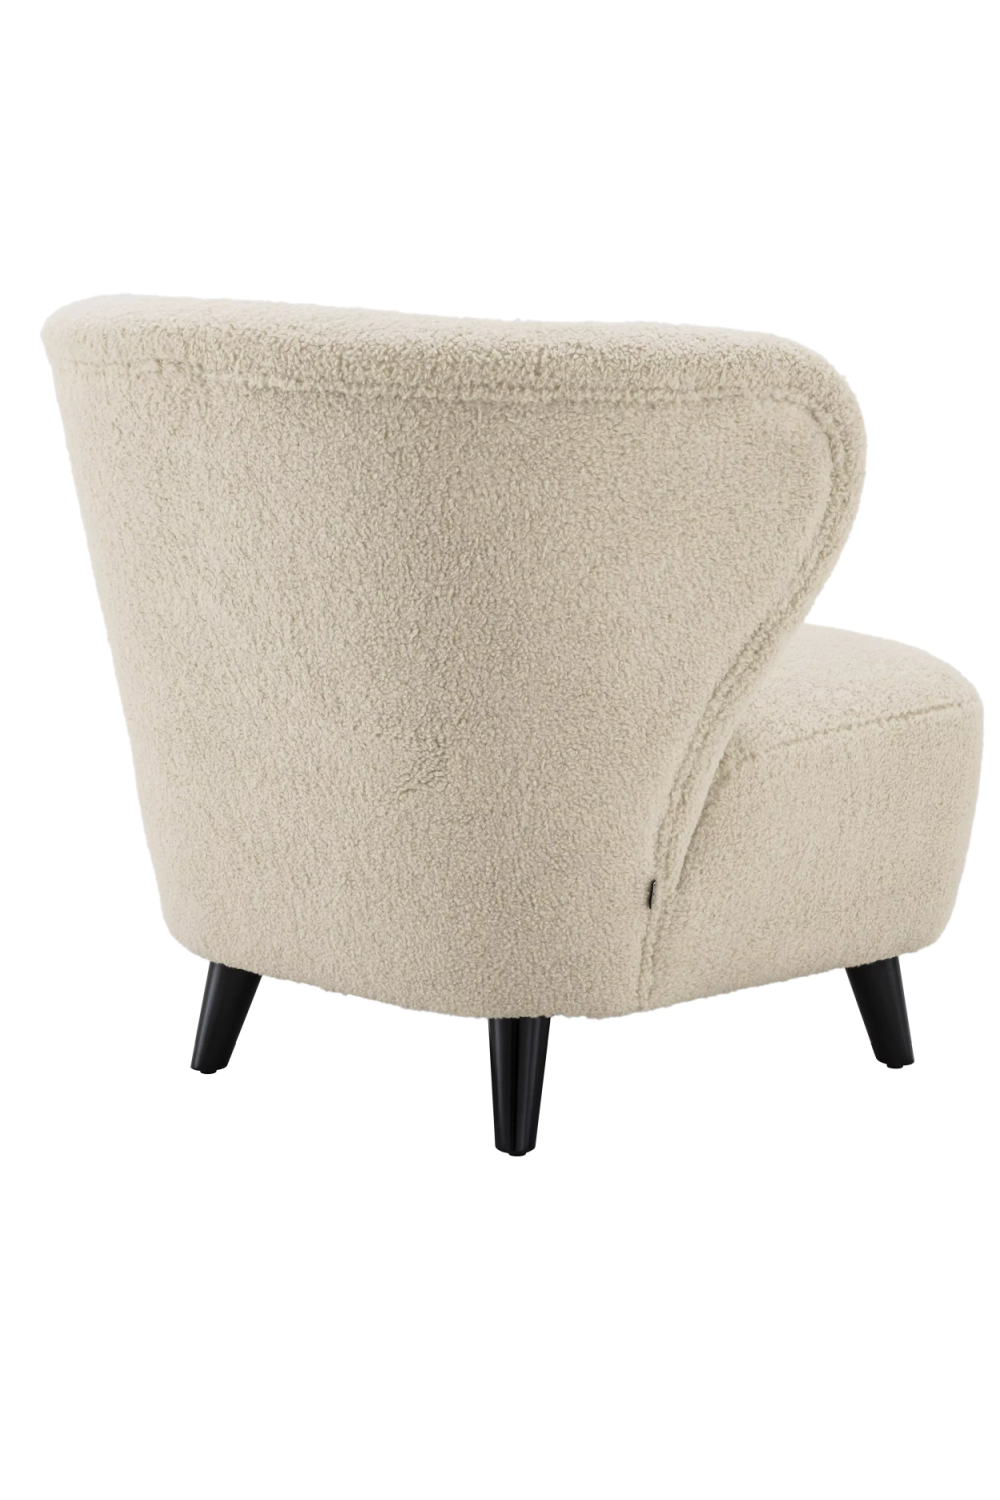 Cream Wingback Accent Chair | Eichholtz Hydra | Oroa.com